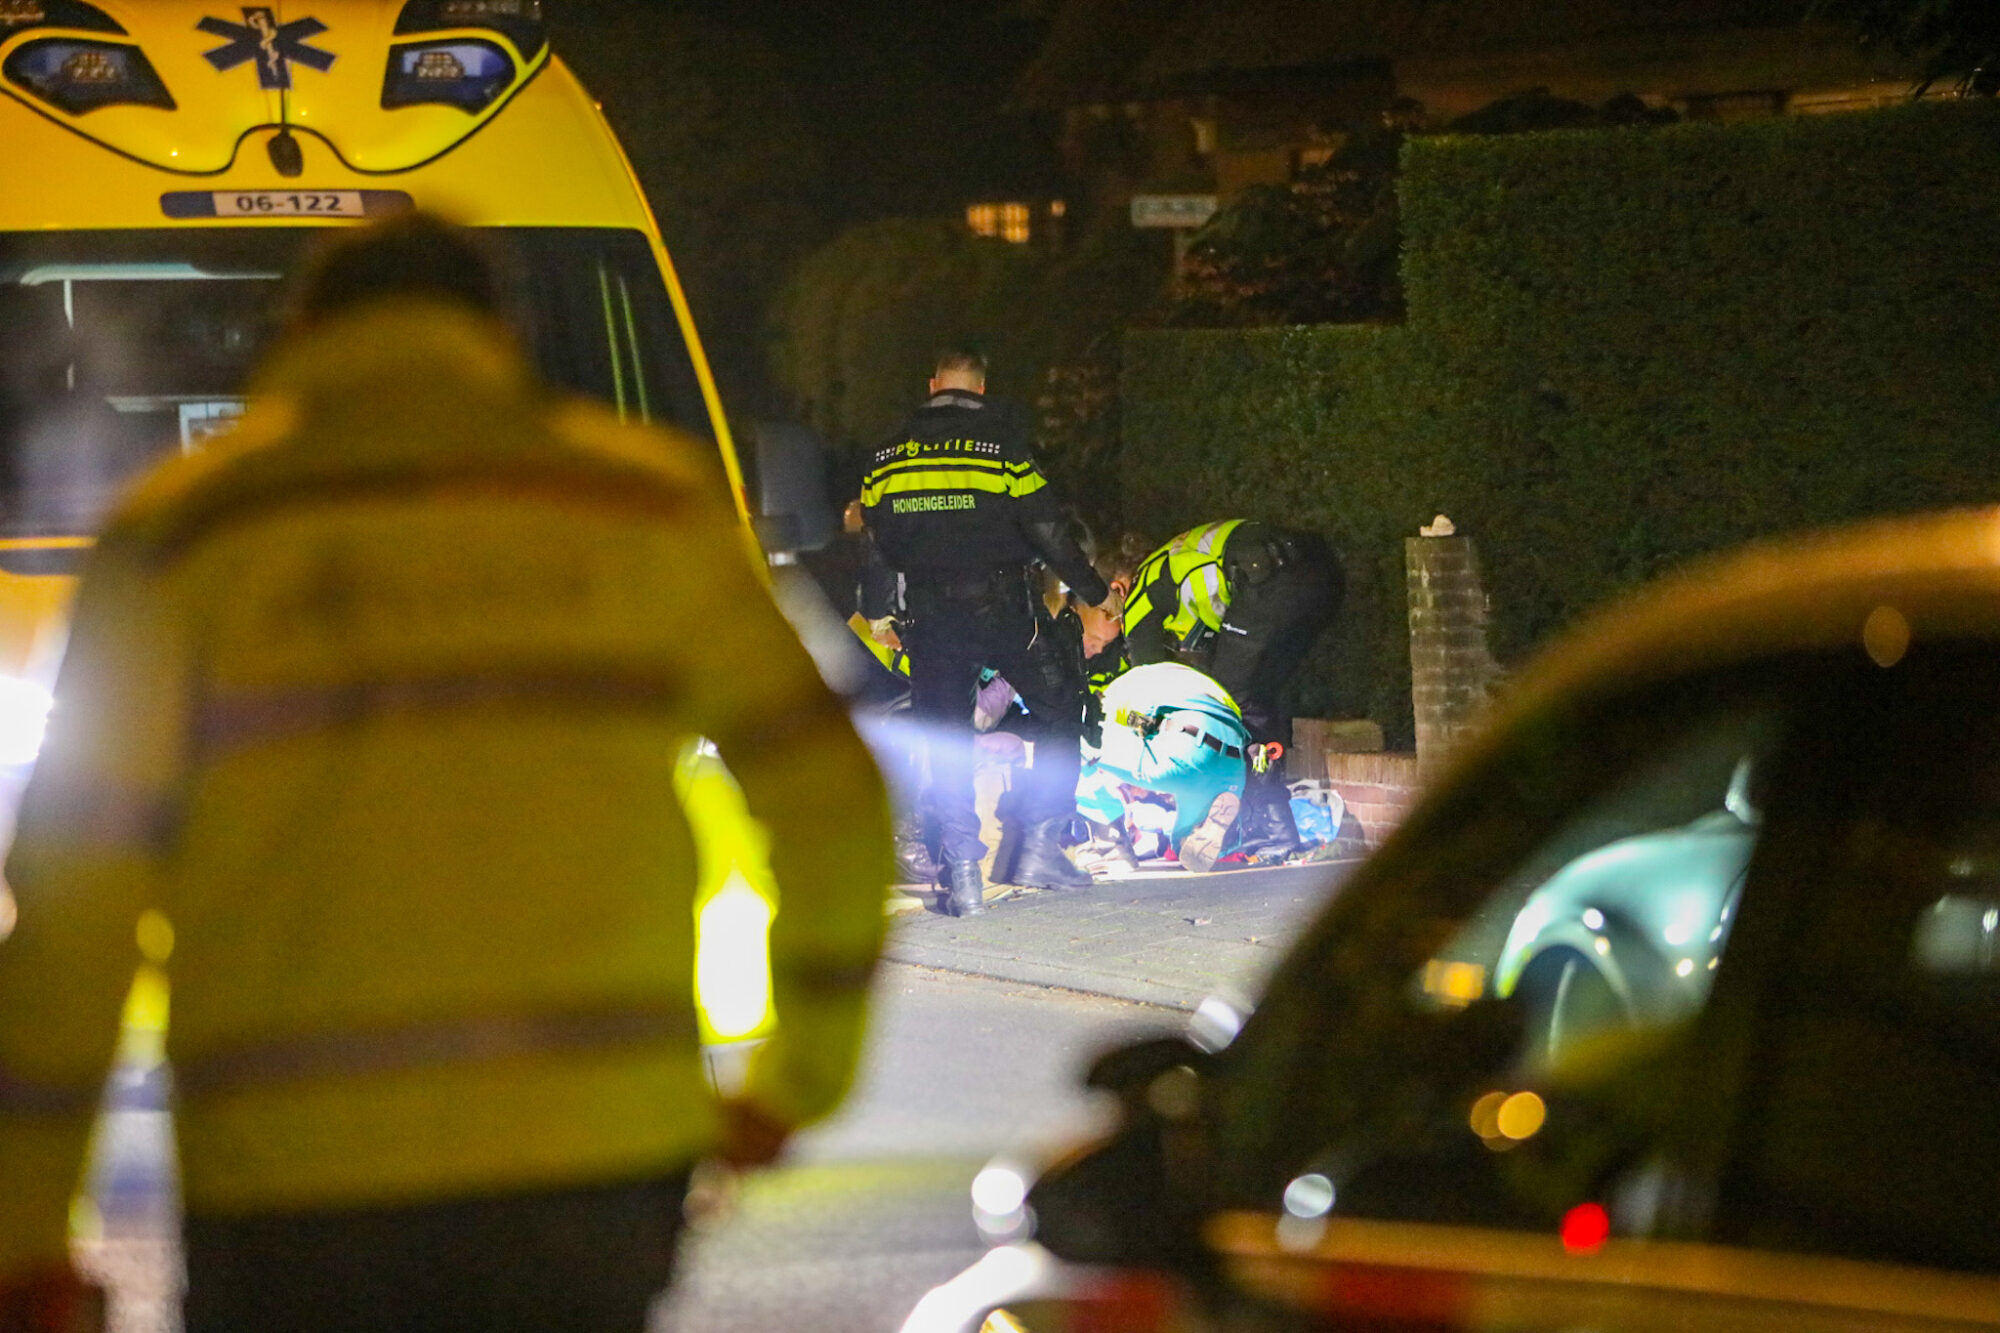 Roerige avond in Apeldoorn; jongeman gewond na steekincident